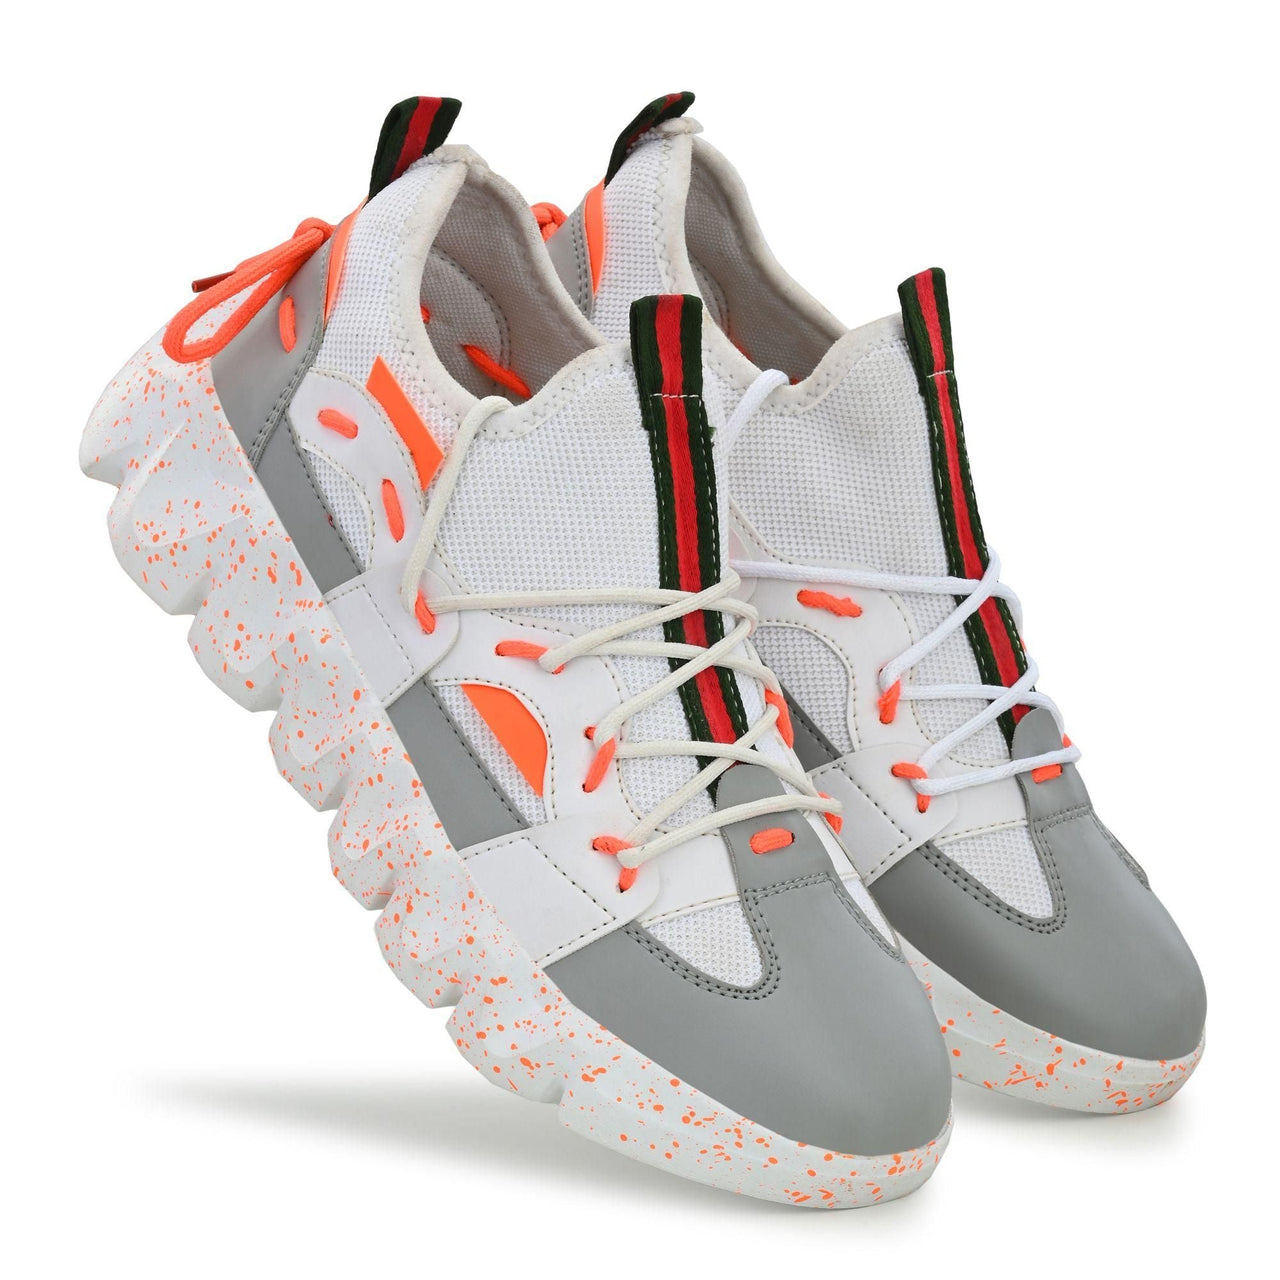 Airbell Men's Orange Mesh Lightweight Sports Running Shoes